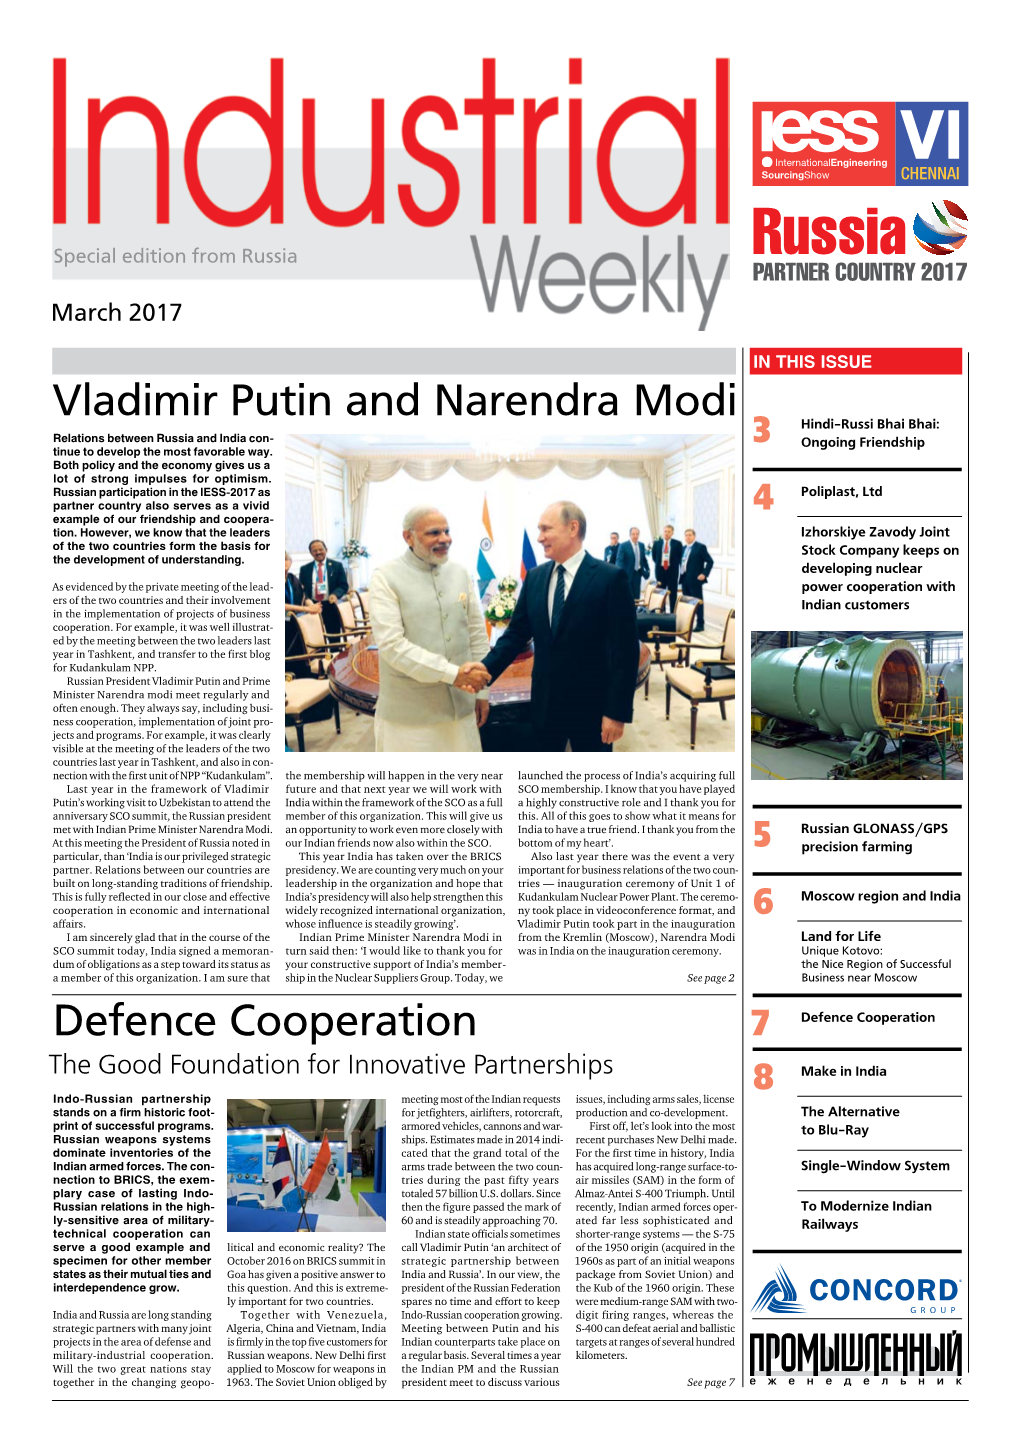 Vladimir Putin and Narendra Modi Defence Cooperation